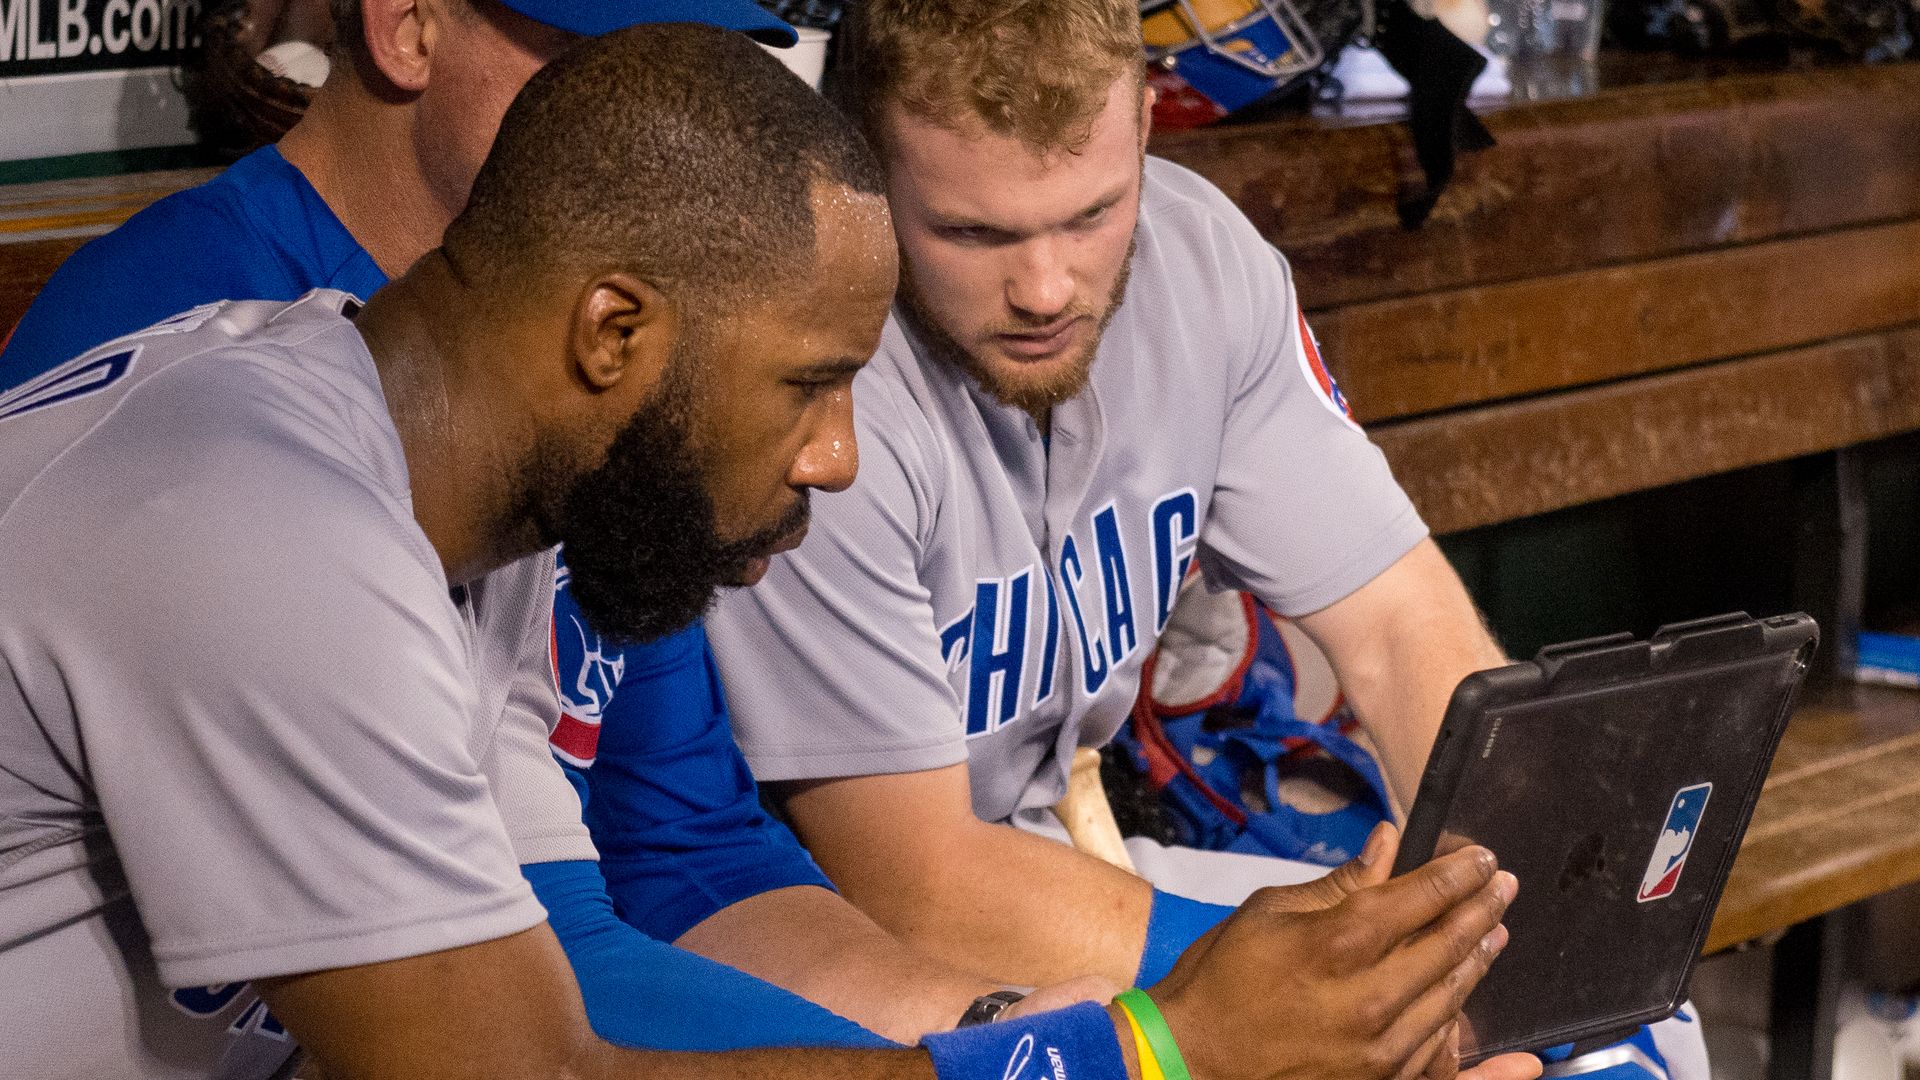 Cubs players watching an iPad